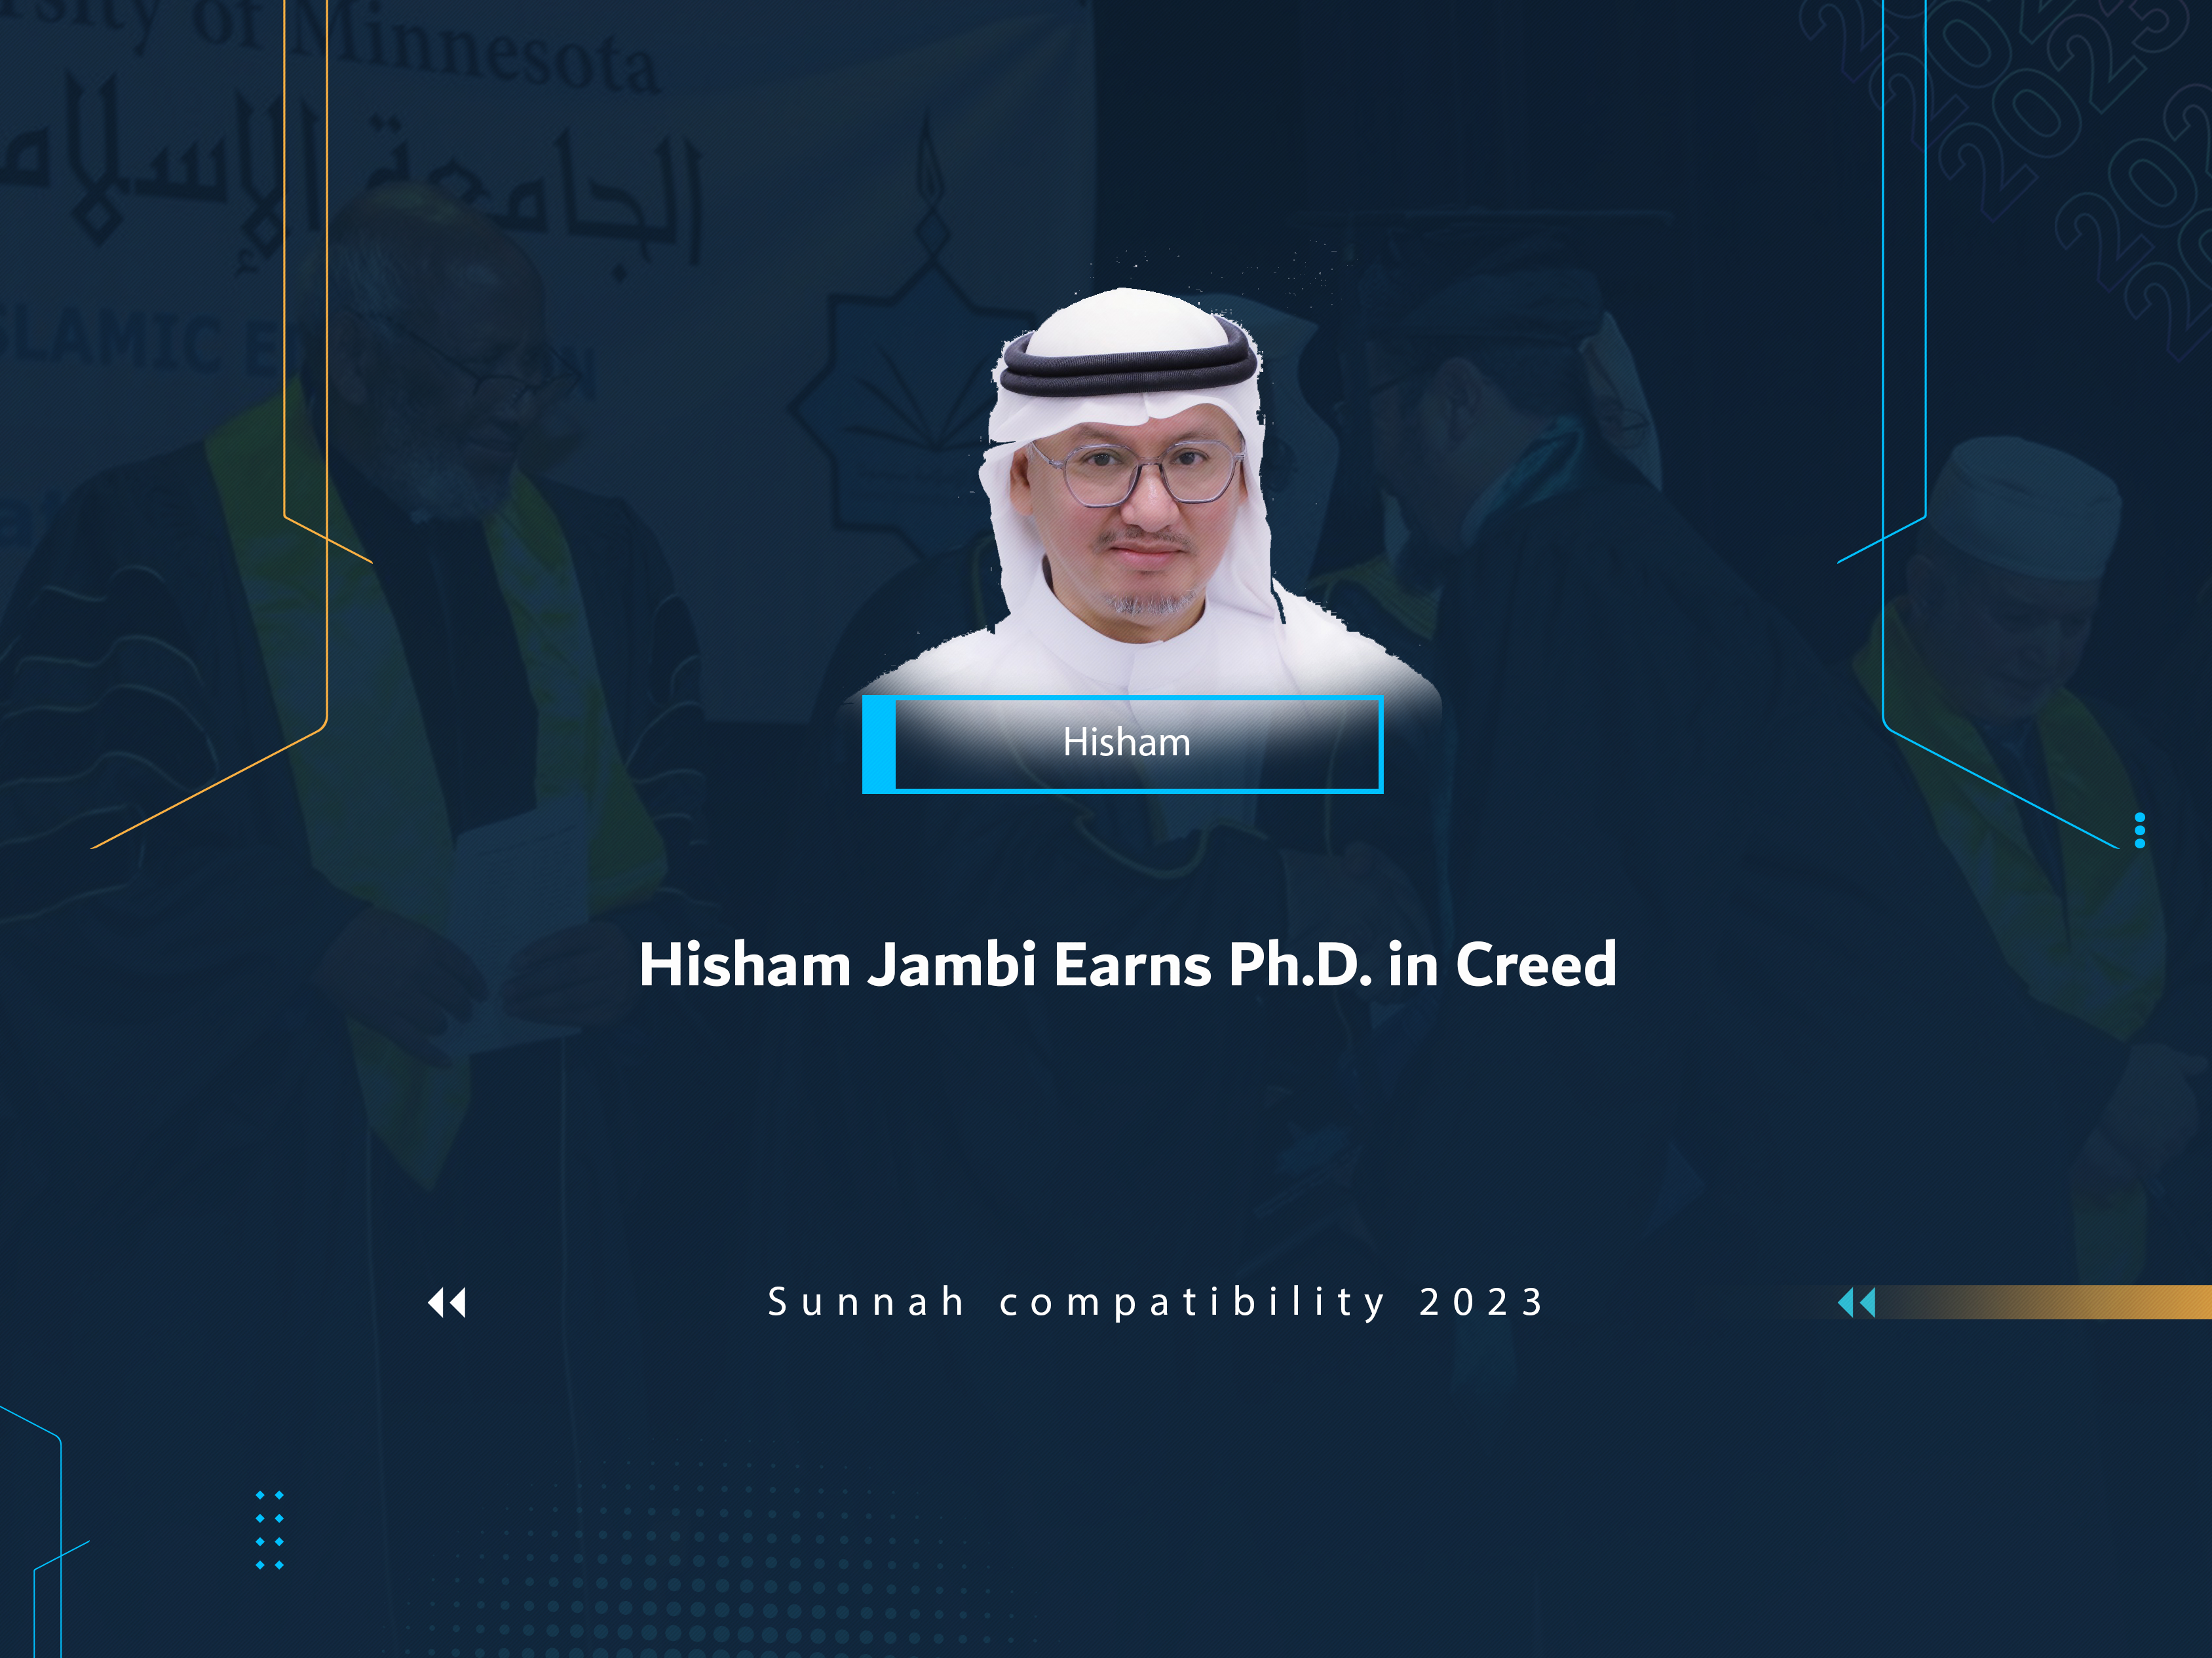 Hisham Jambi Earns Ph.D. in Creed